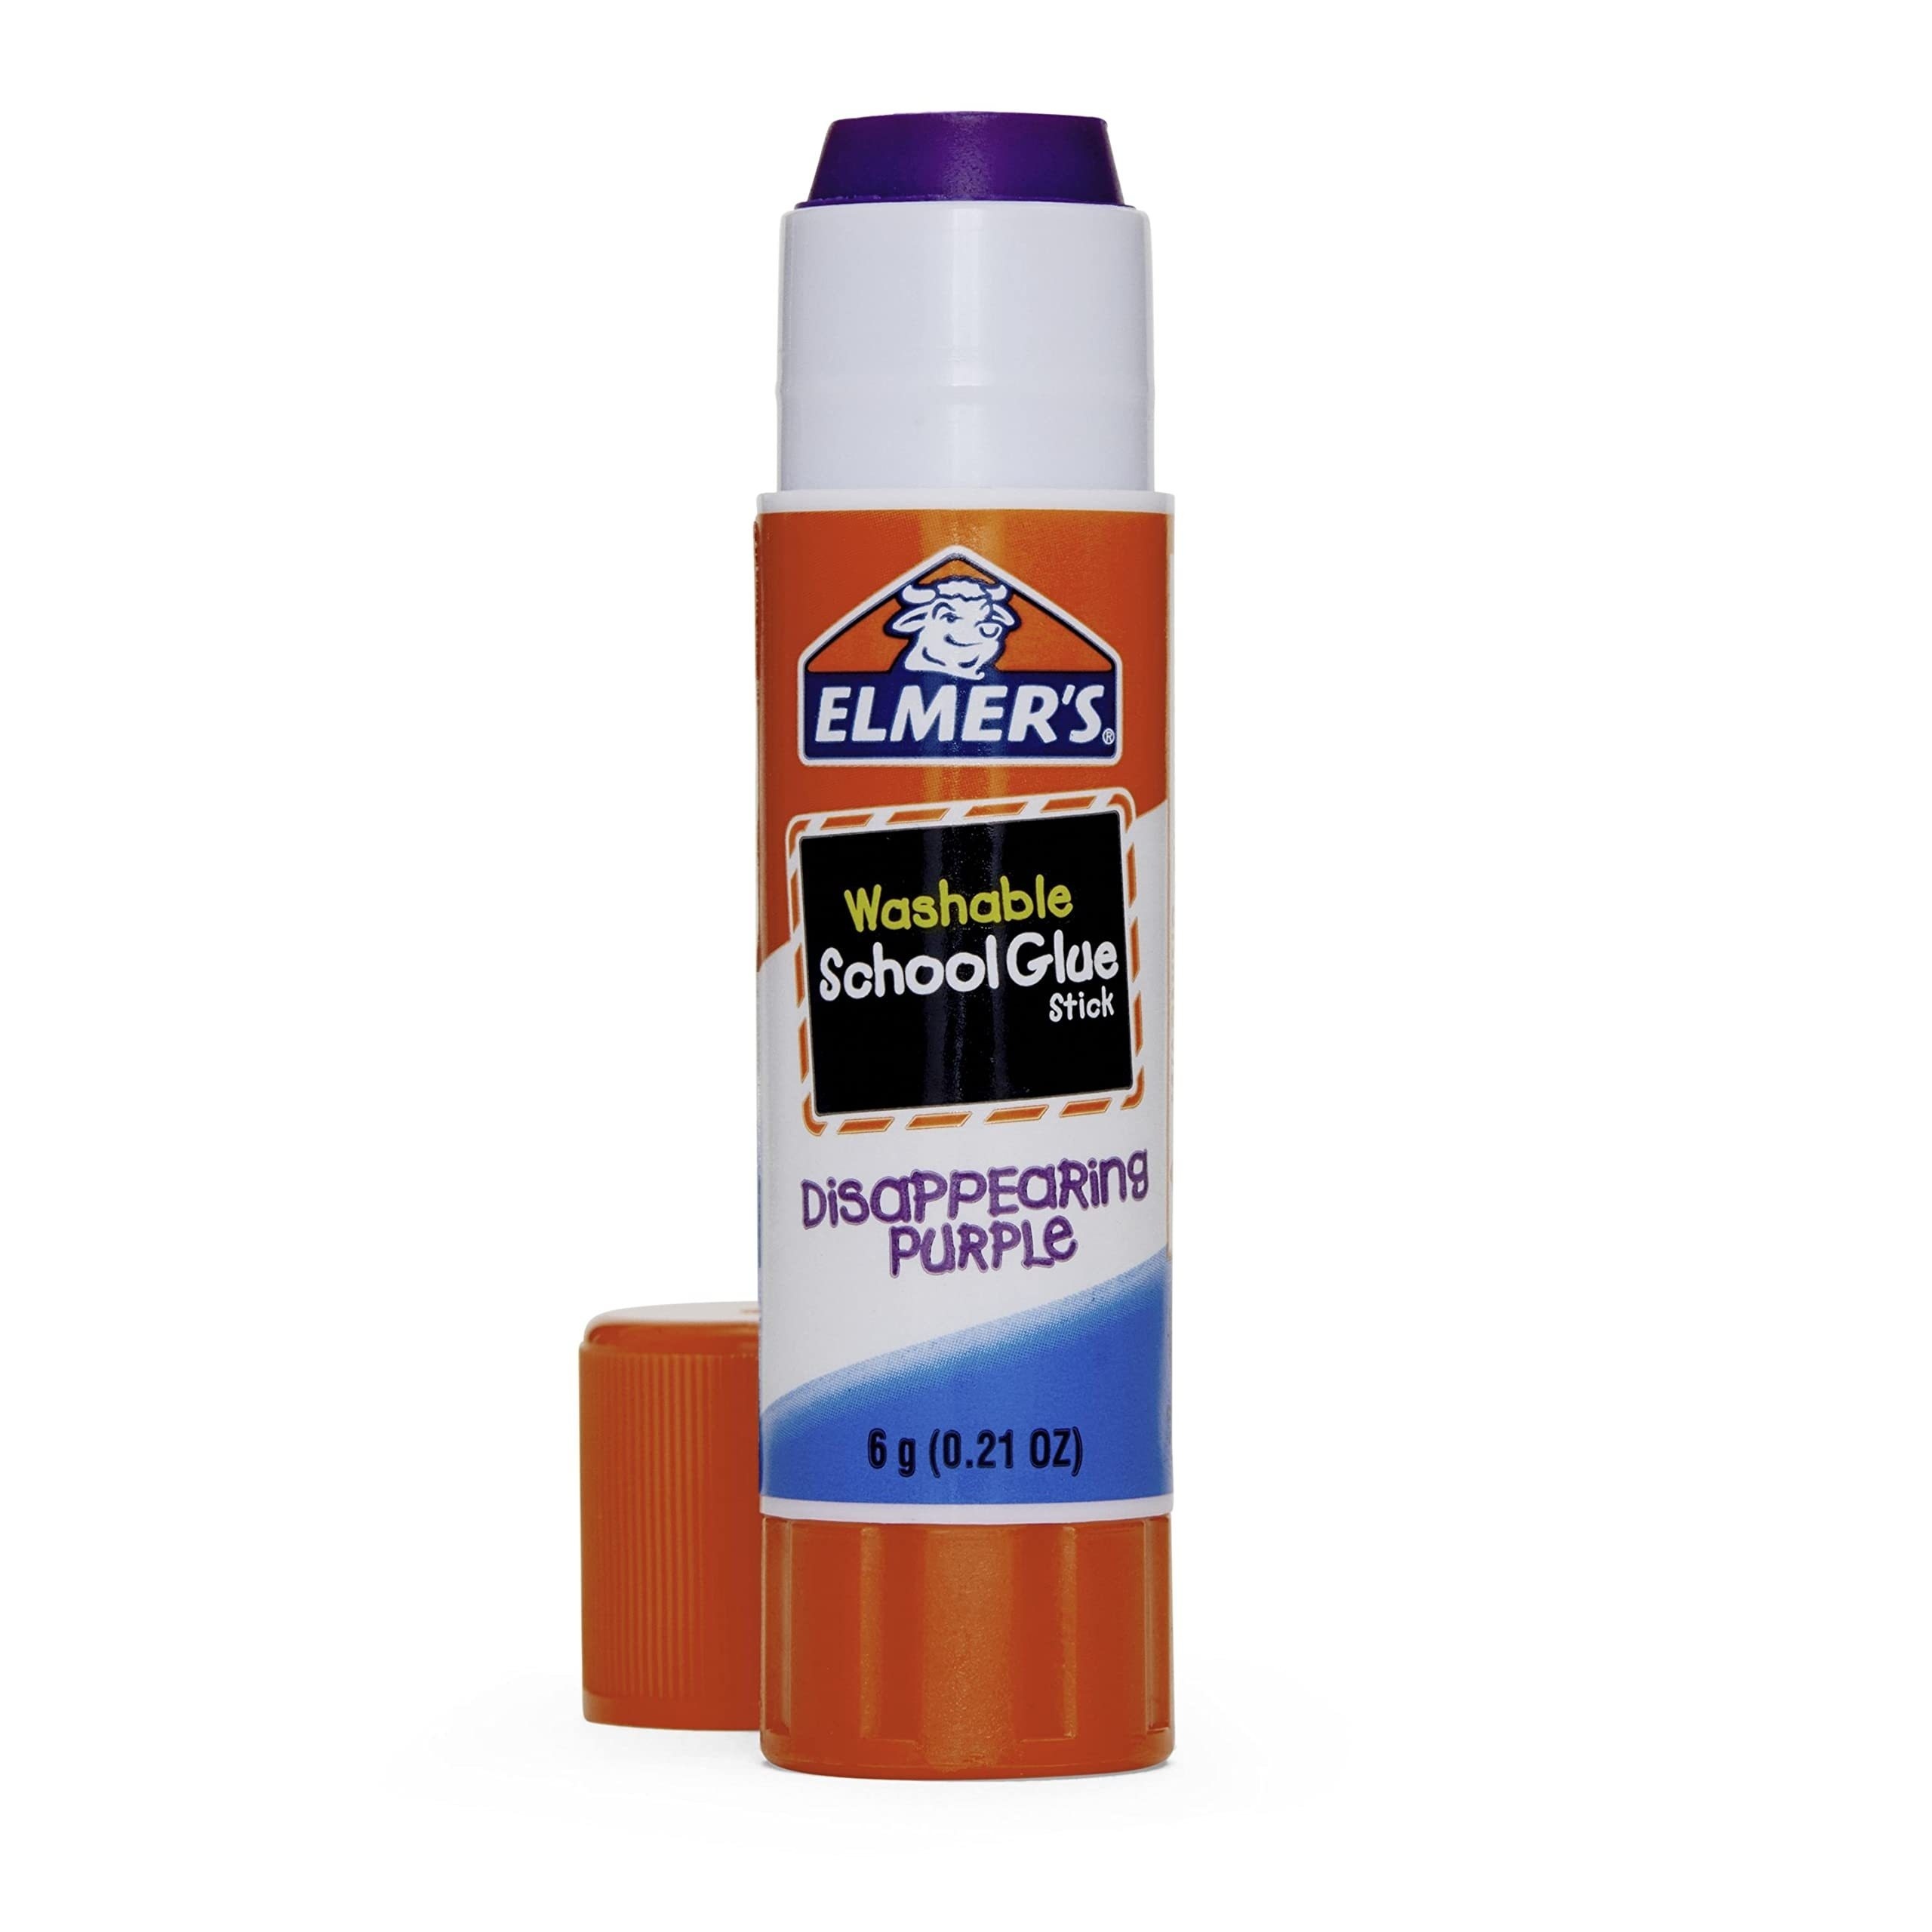 Elmer's Washable School Glue Sticks, 0.53 oz, 2-Count 